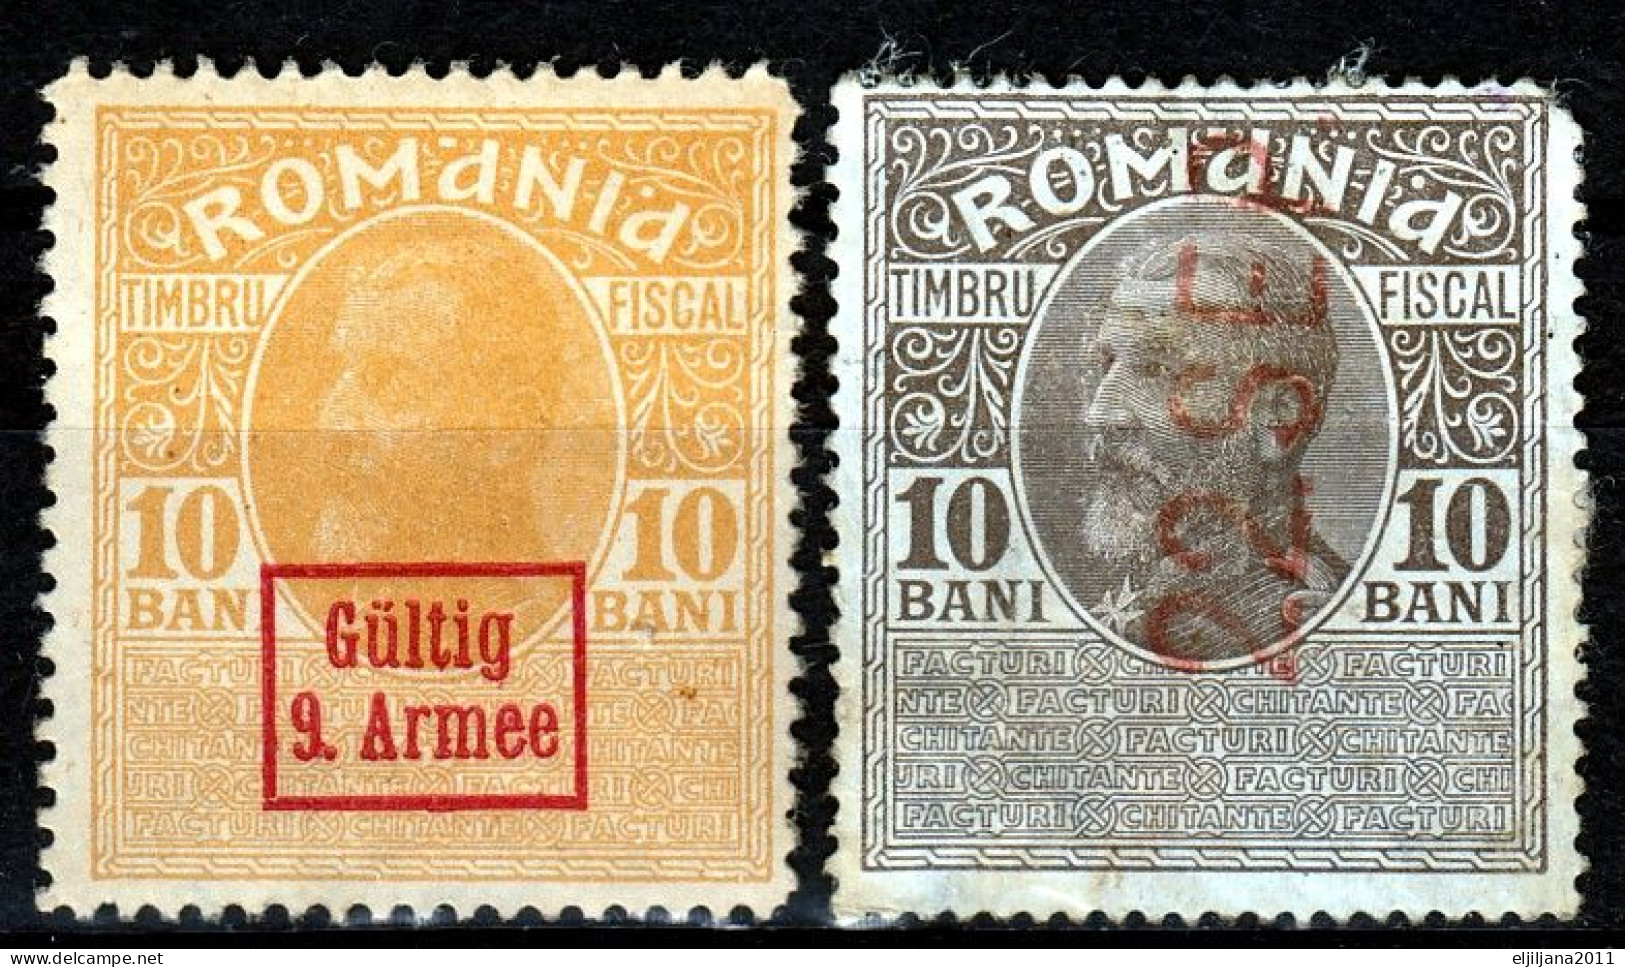 ⁕ Romania 1917 - 1918 Rumänien WWI ⁕ German Occupation "Gültig 9. Armee" Revenue Fiscal Tax Timbru 10 Bani ⁕ 2v MNH & MH - Bezetting